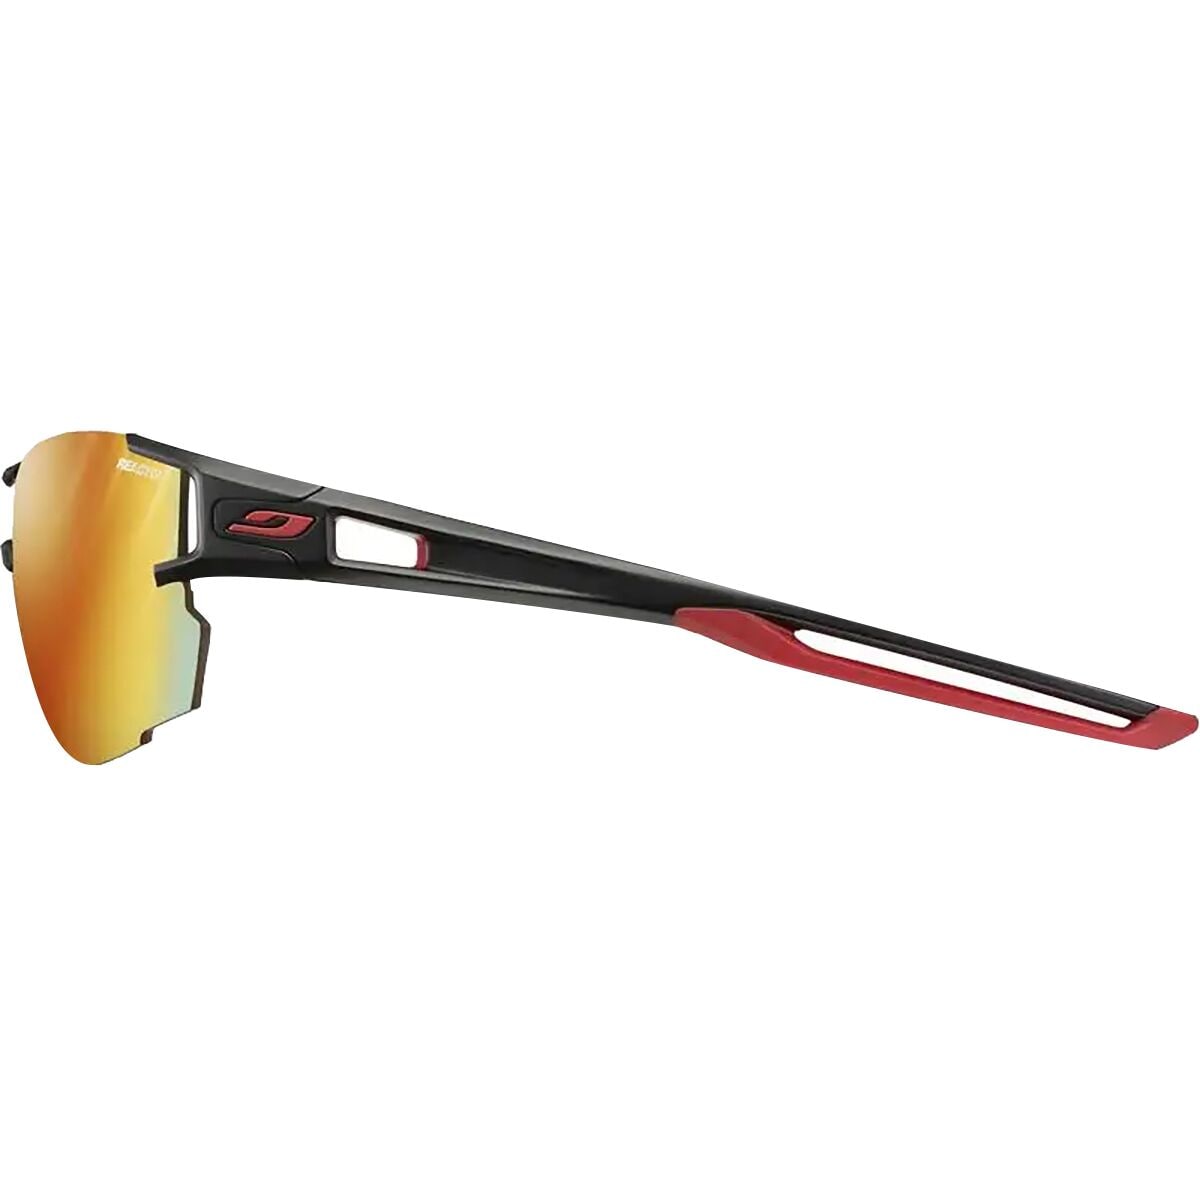 Julbo Aerolite REACTIV Performance Sunglasses - Accessories